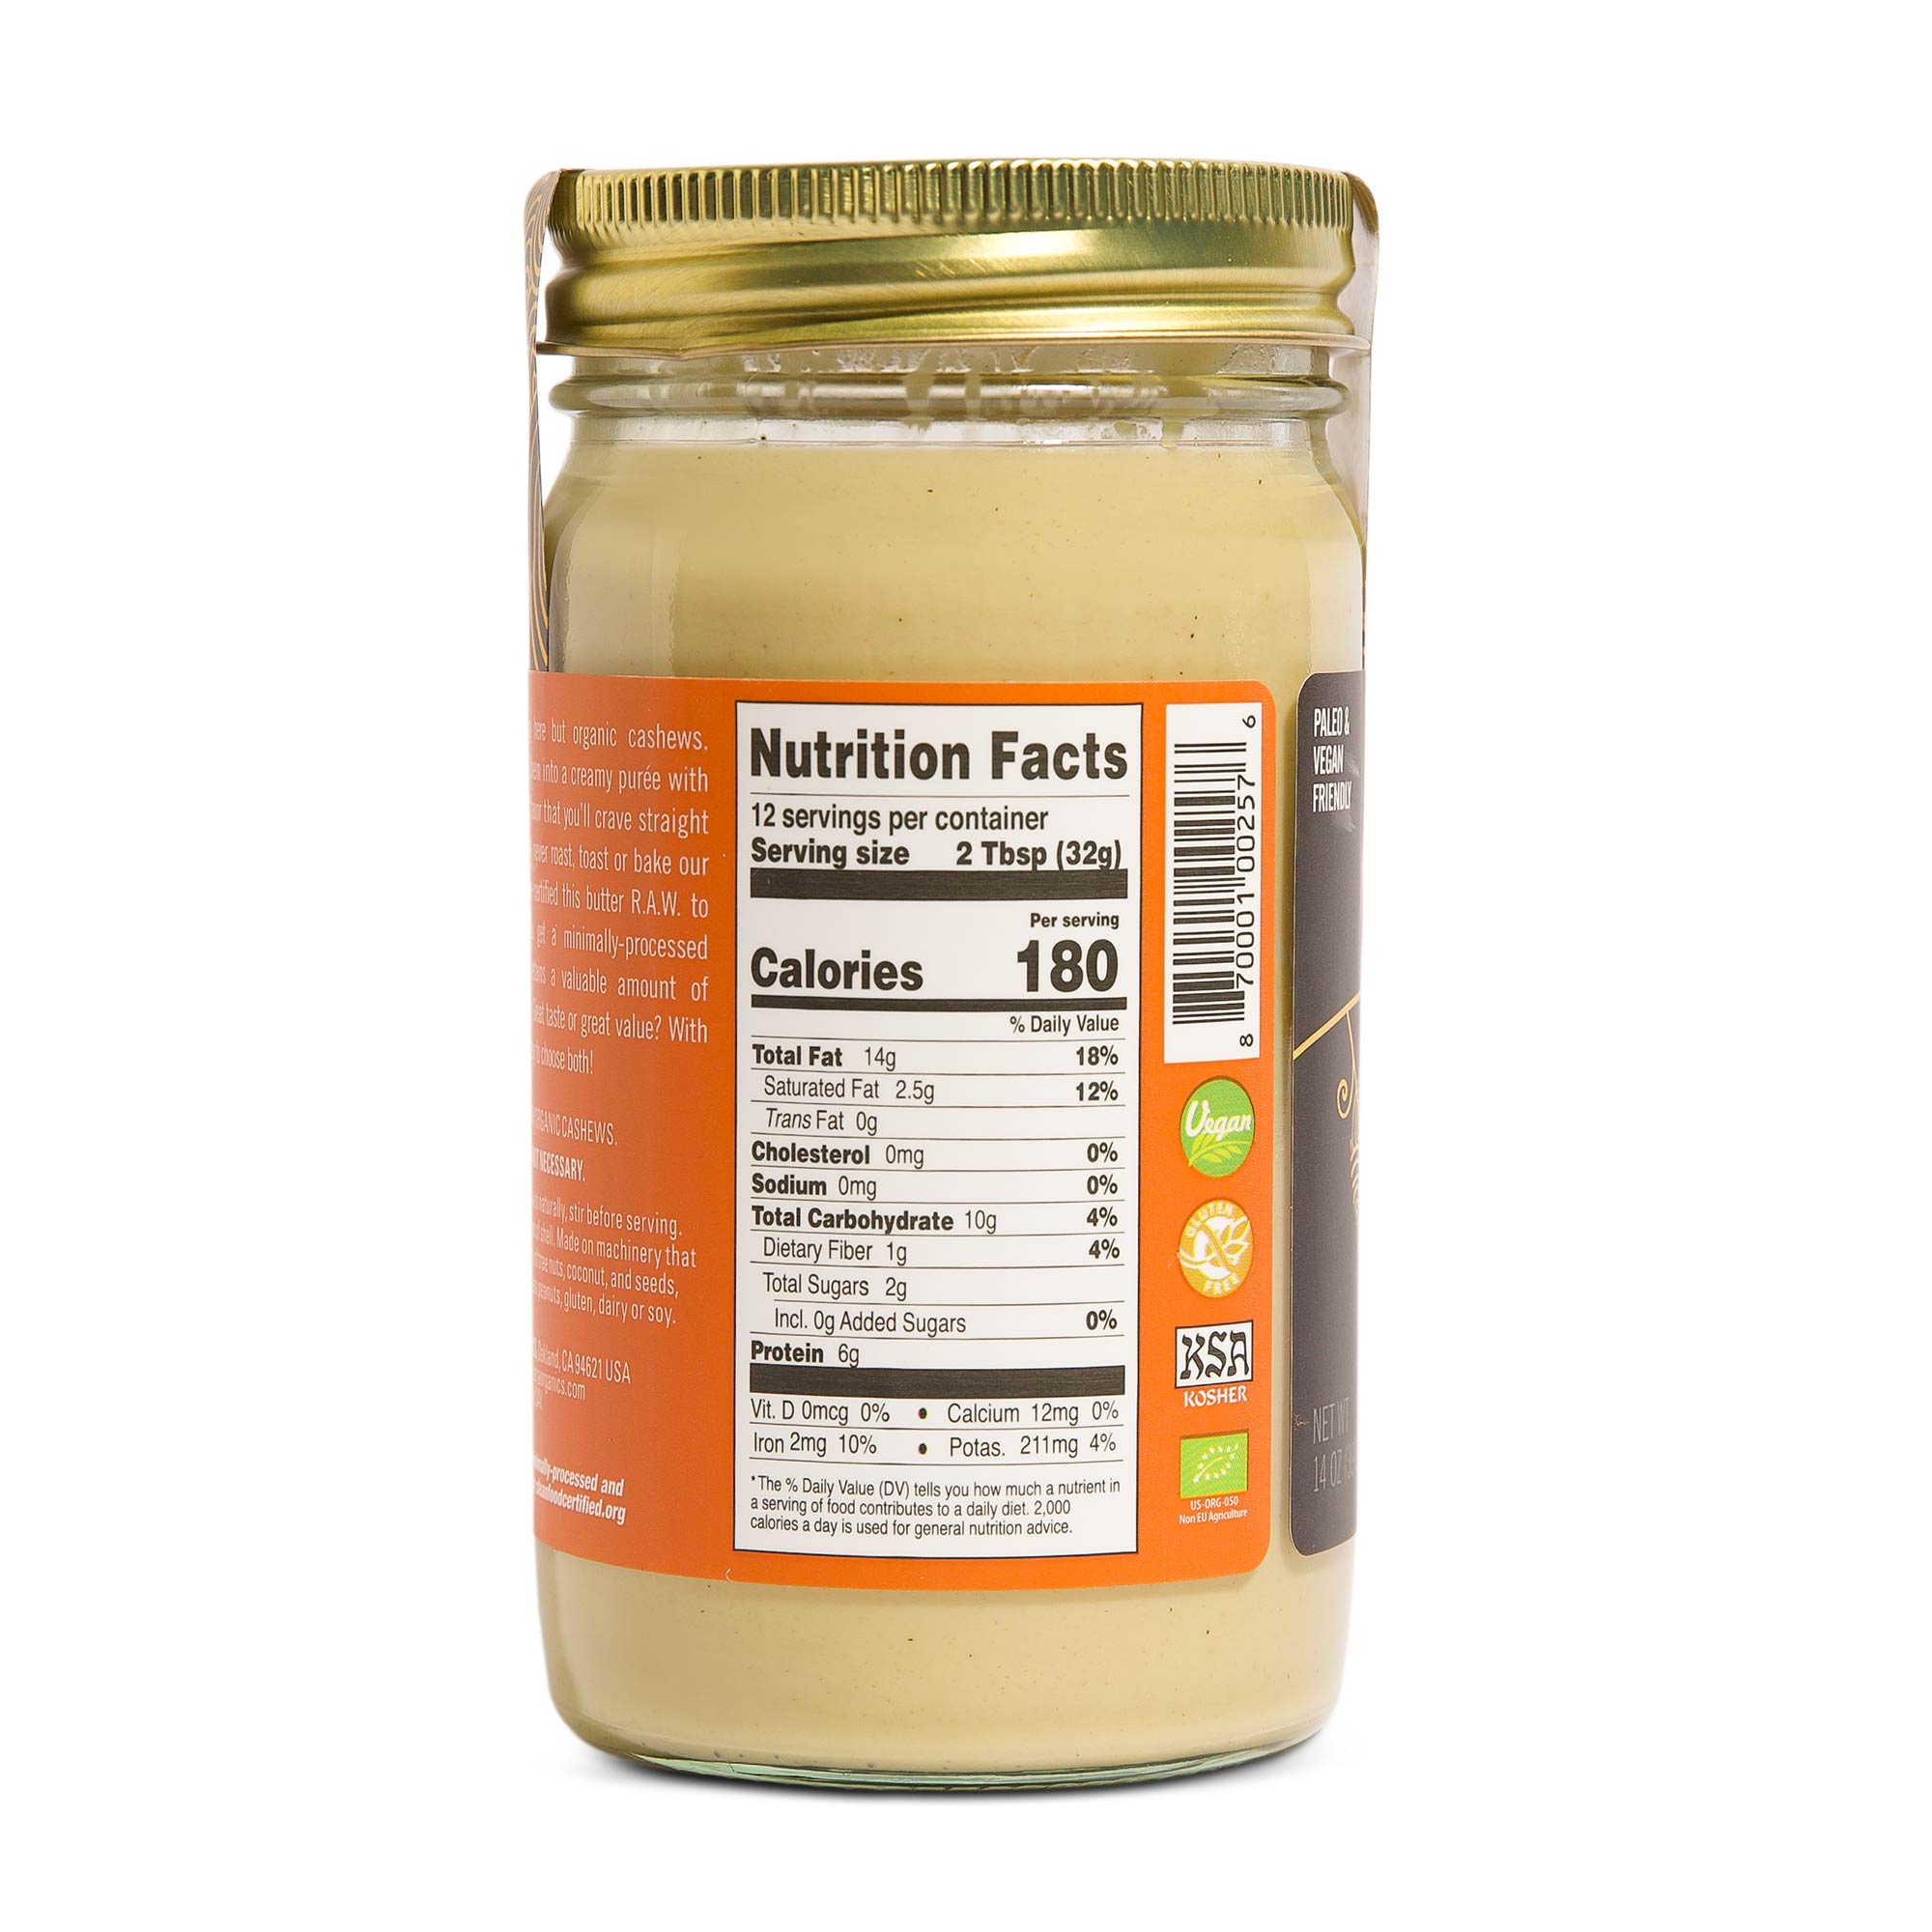 Artisana Raw Cashew Butter Nutritional Facts, 14oz jar